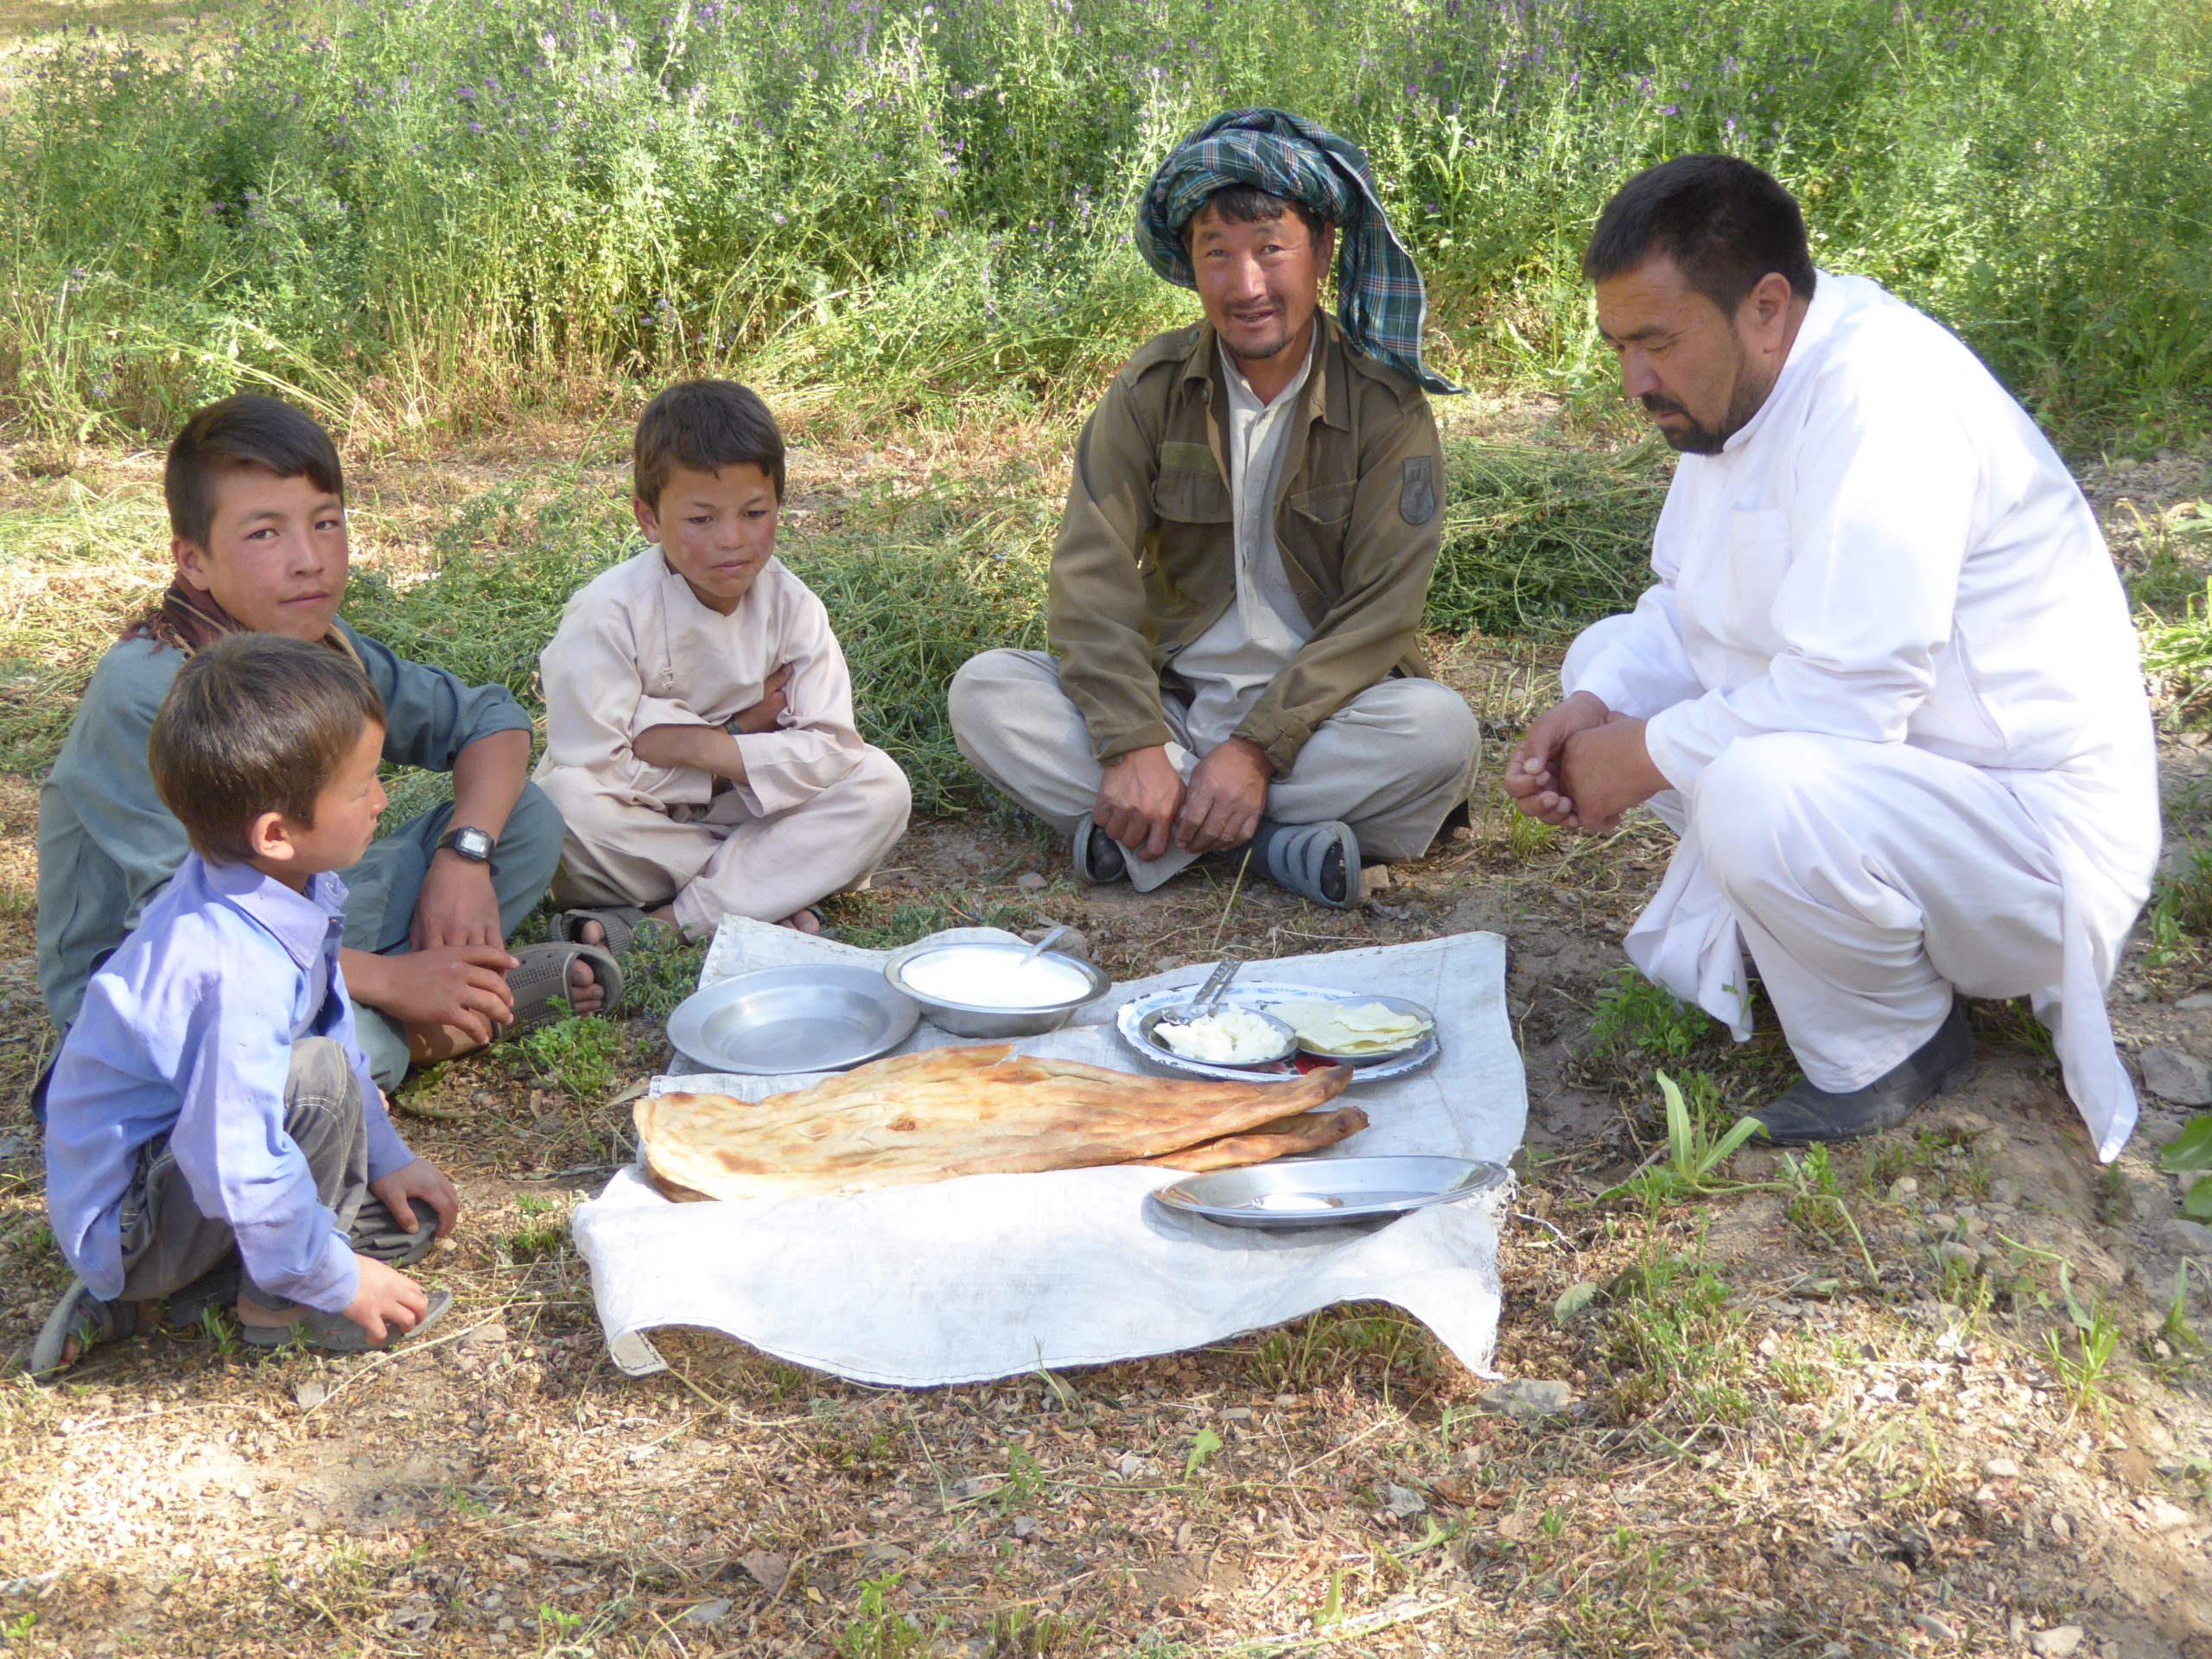 Bread and spread in Bamyan, Afghanistan. (Photo: Nigel Poole/SOAS University of London)